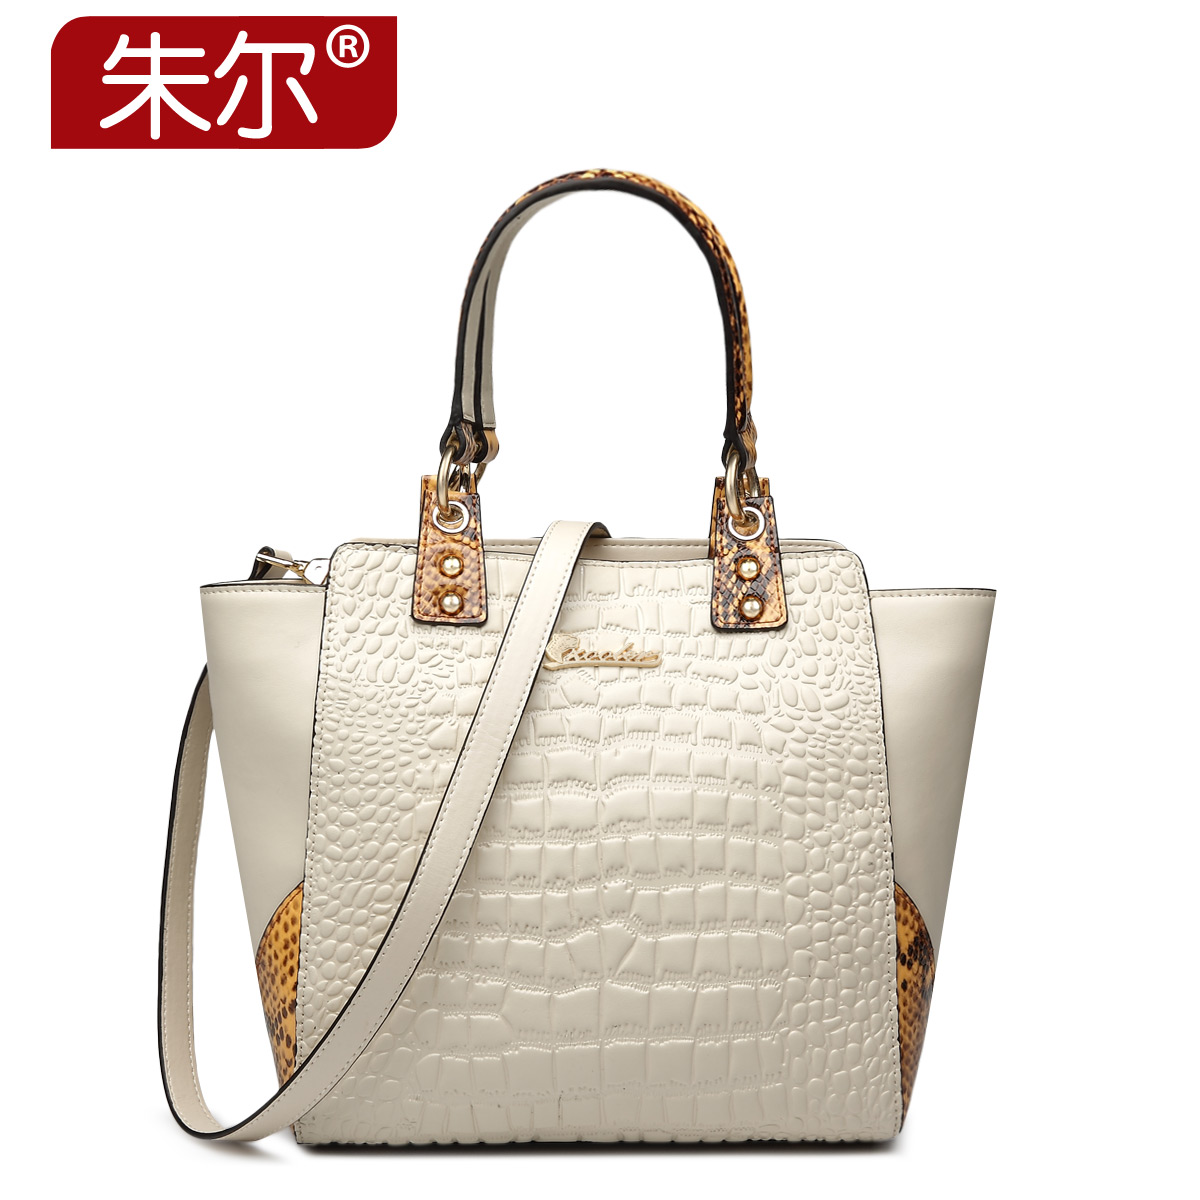 For Crocodile cowhide handbag 2015 autumn and winter women's handbag color block fashion elegant one shoulder bag handbag female